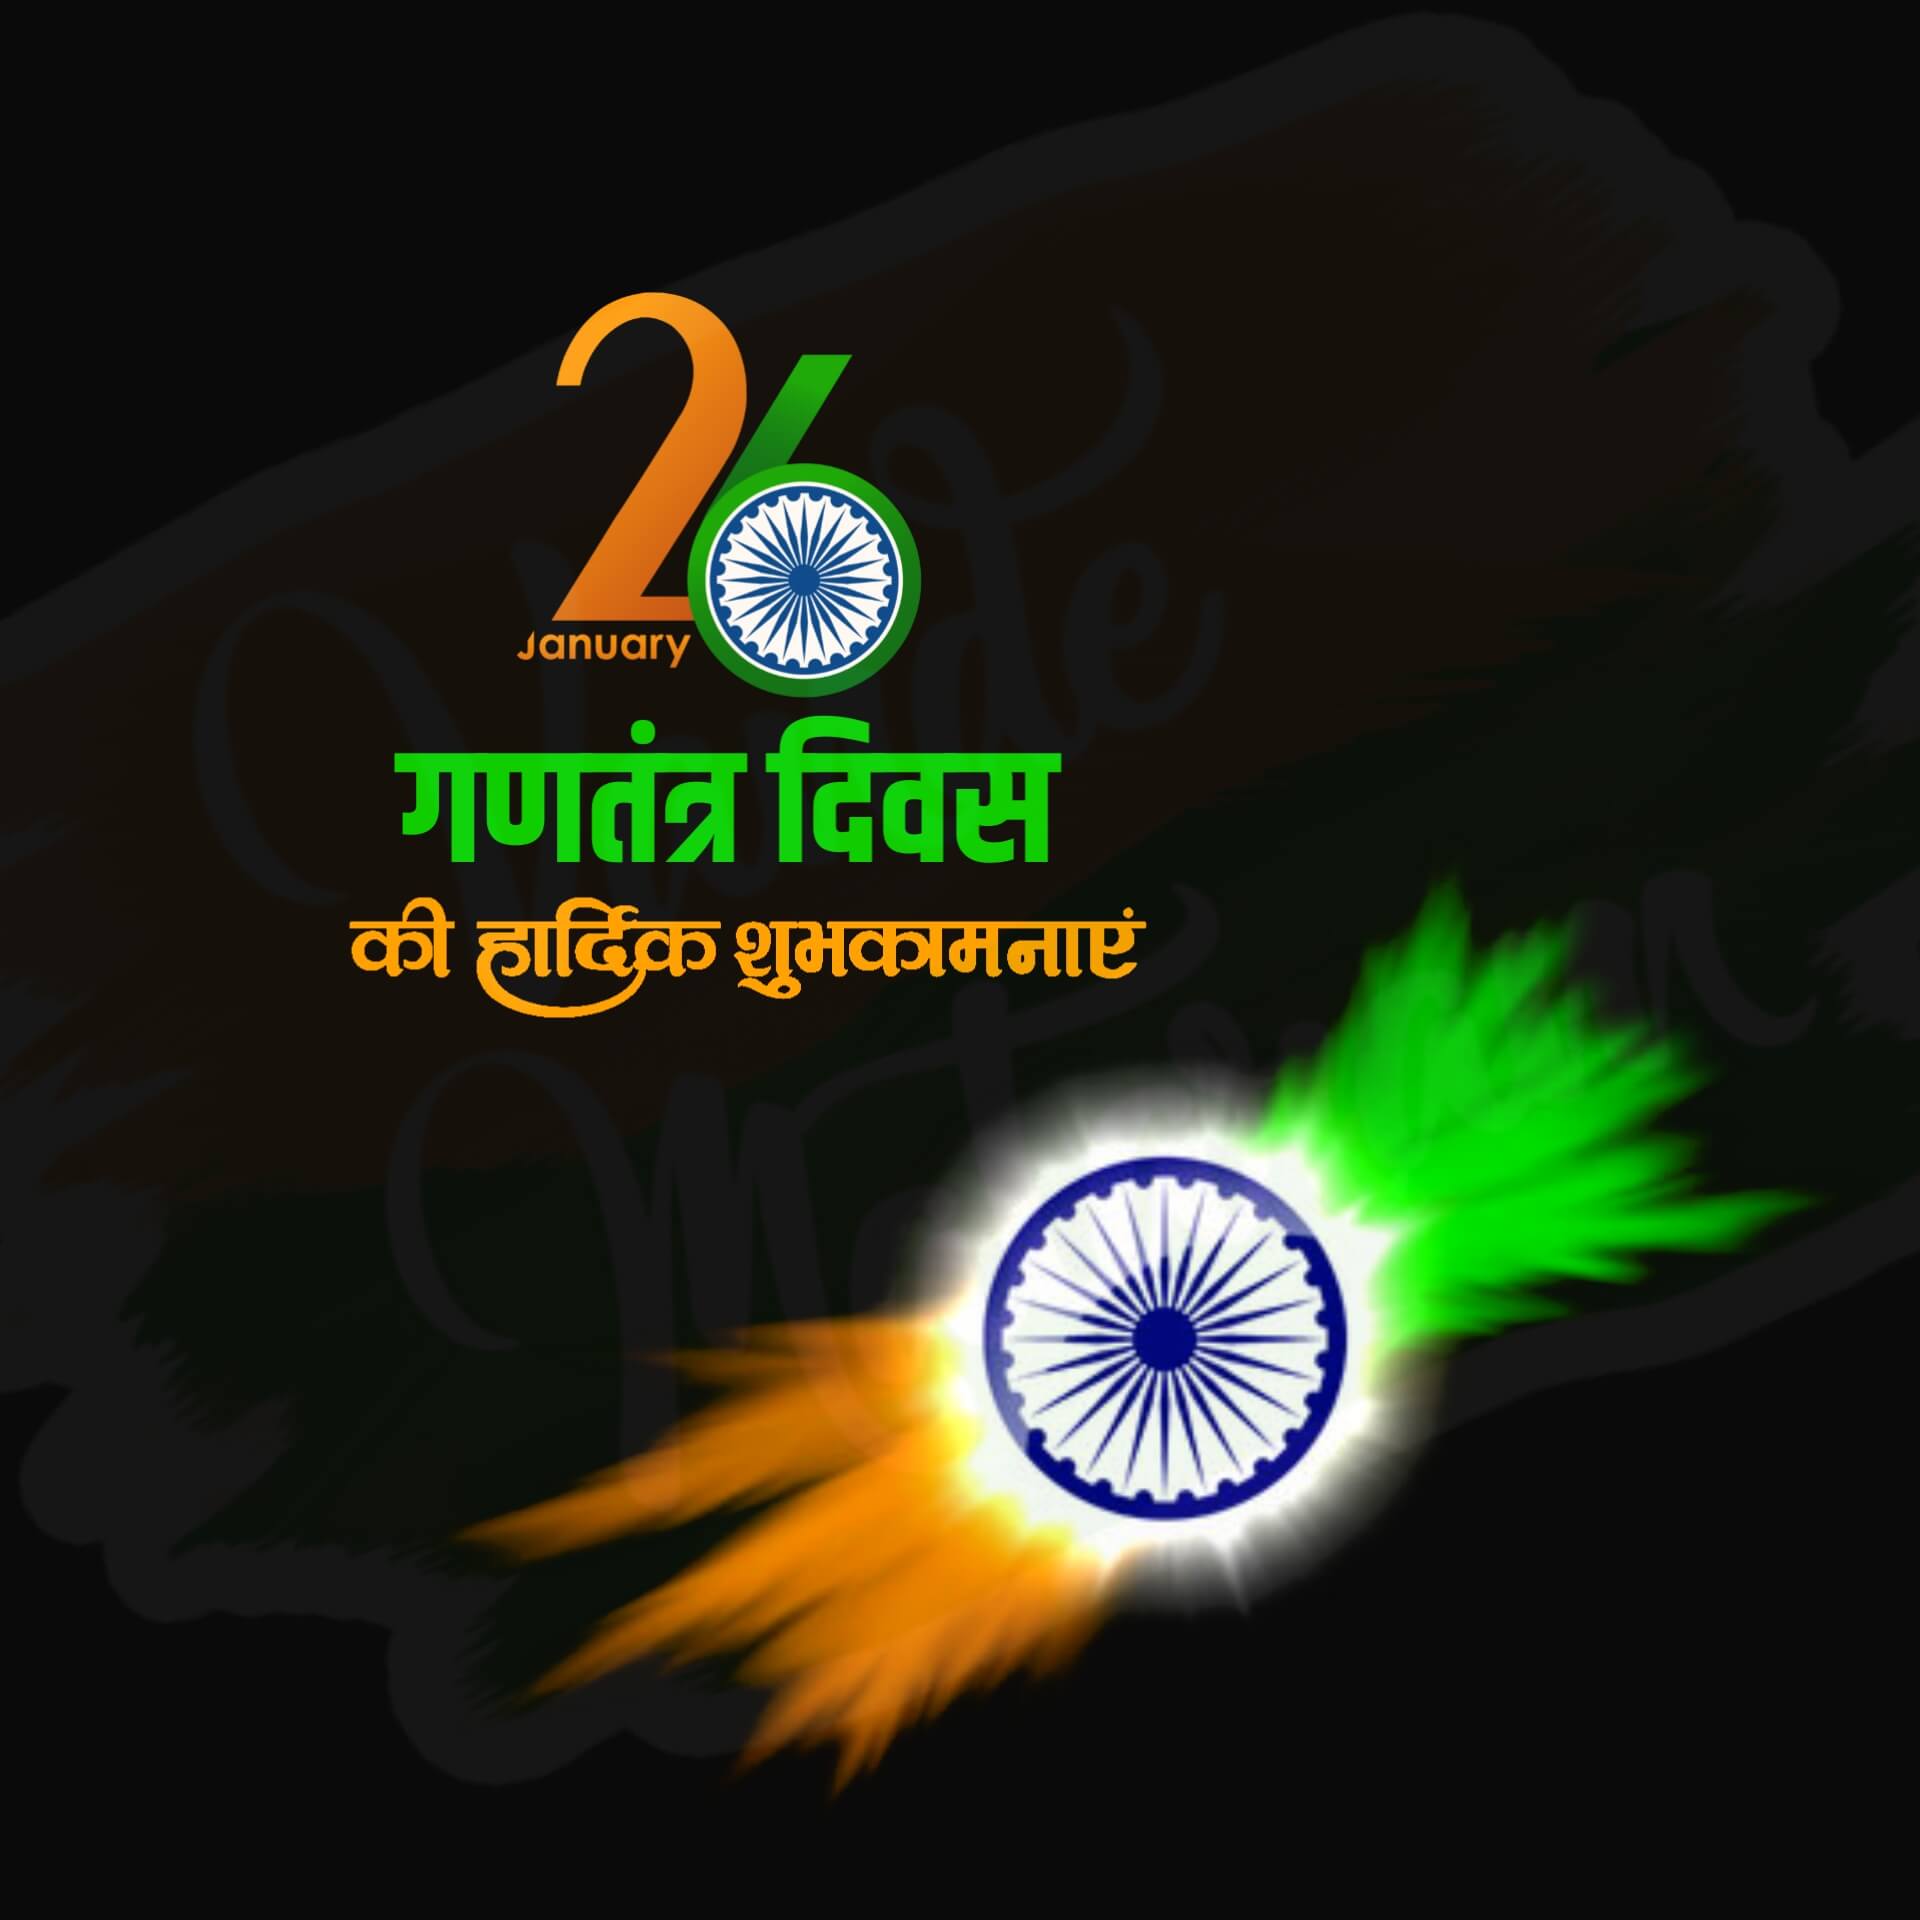 26 january image in Hindi